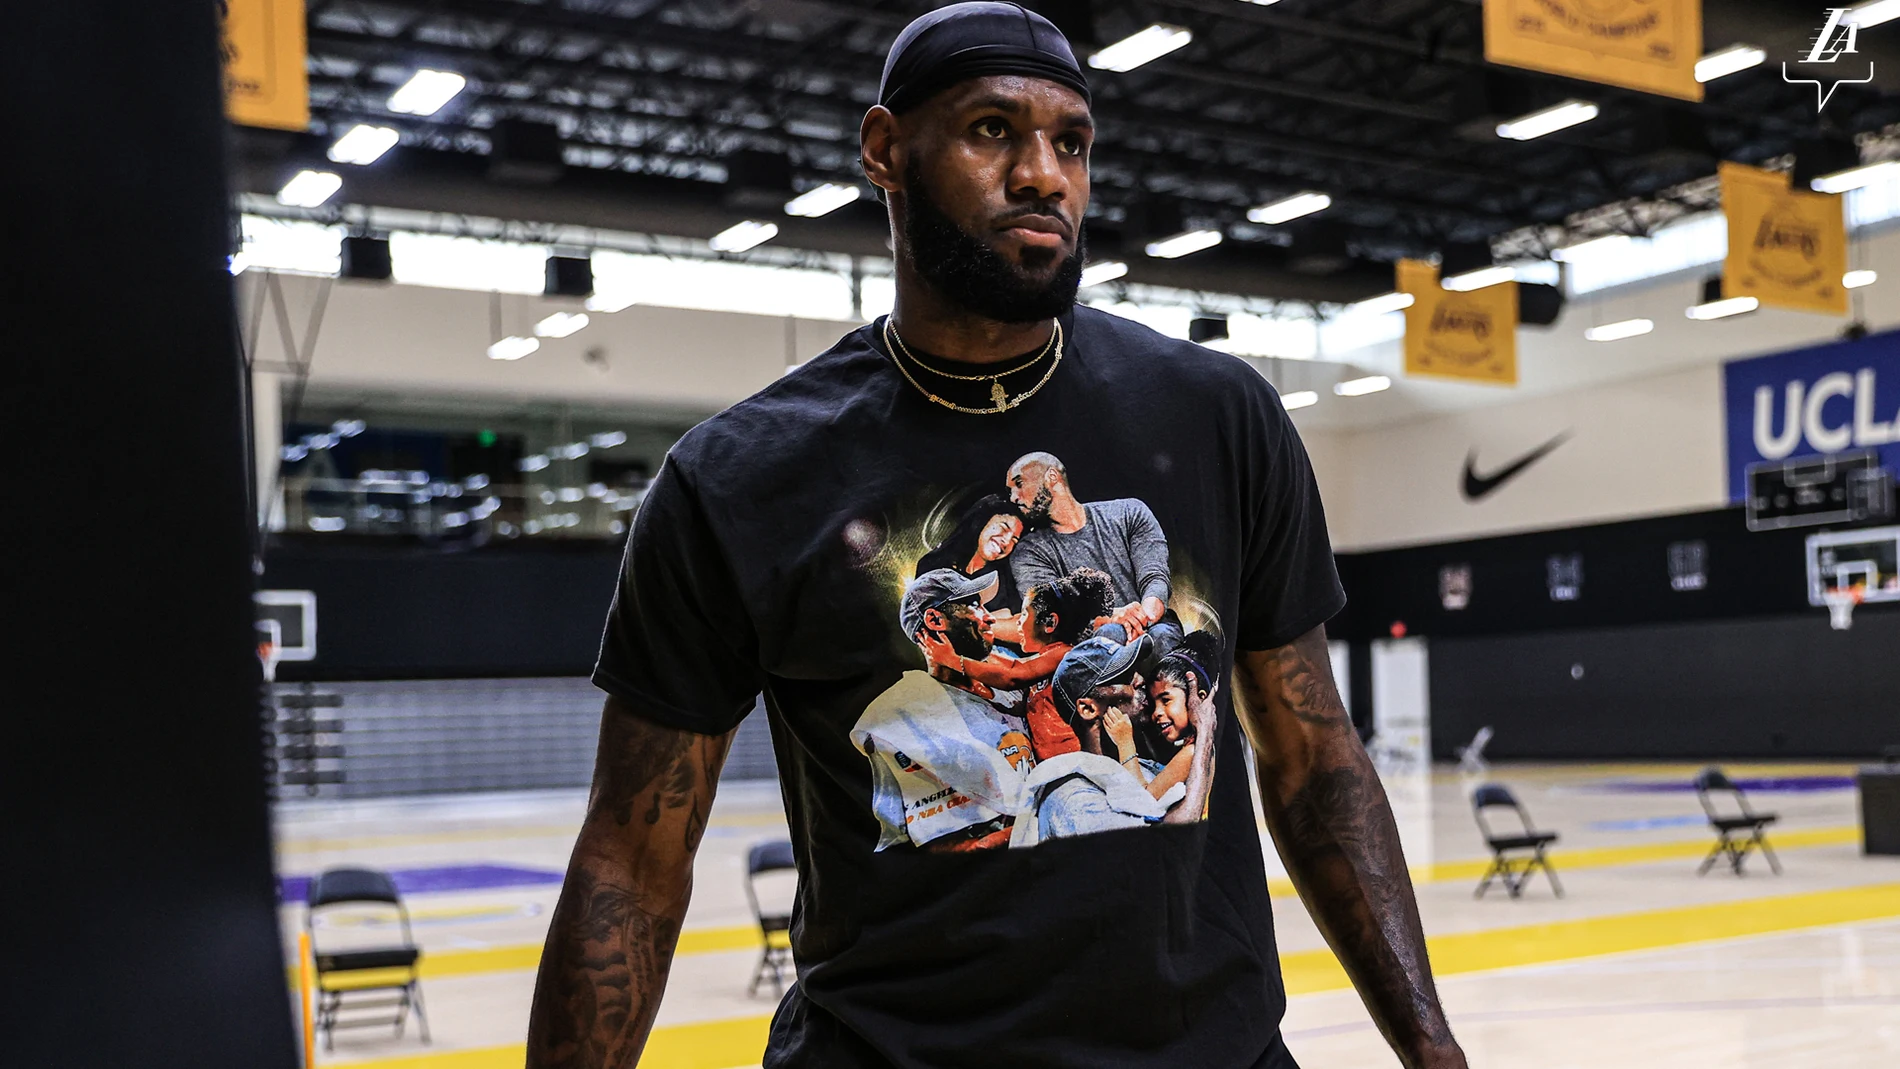 Camiseta de LeBron James en homenaje a Kobe Bryant y su hija Gianna.